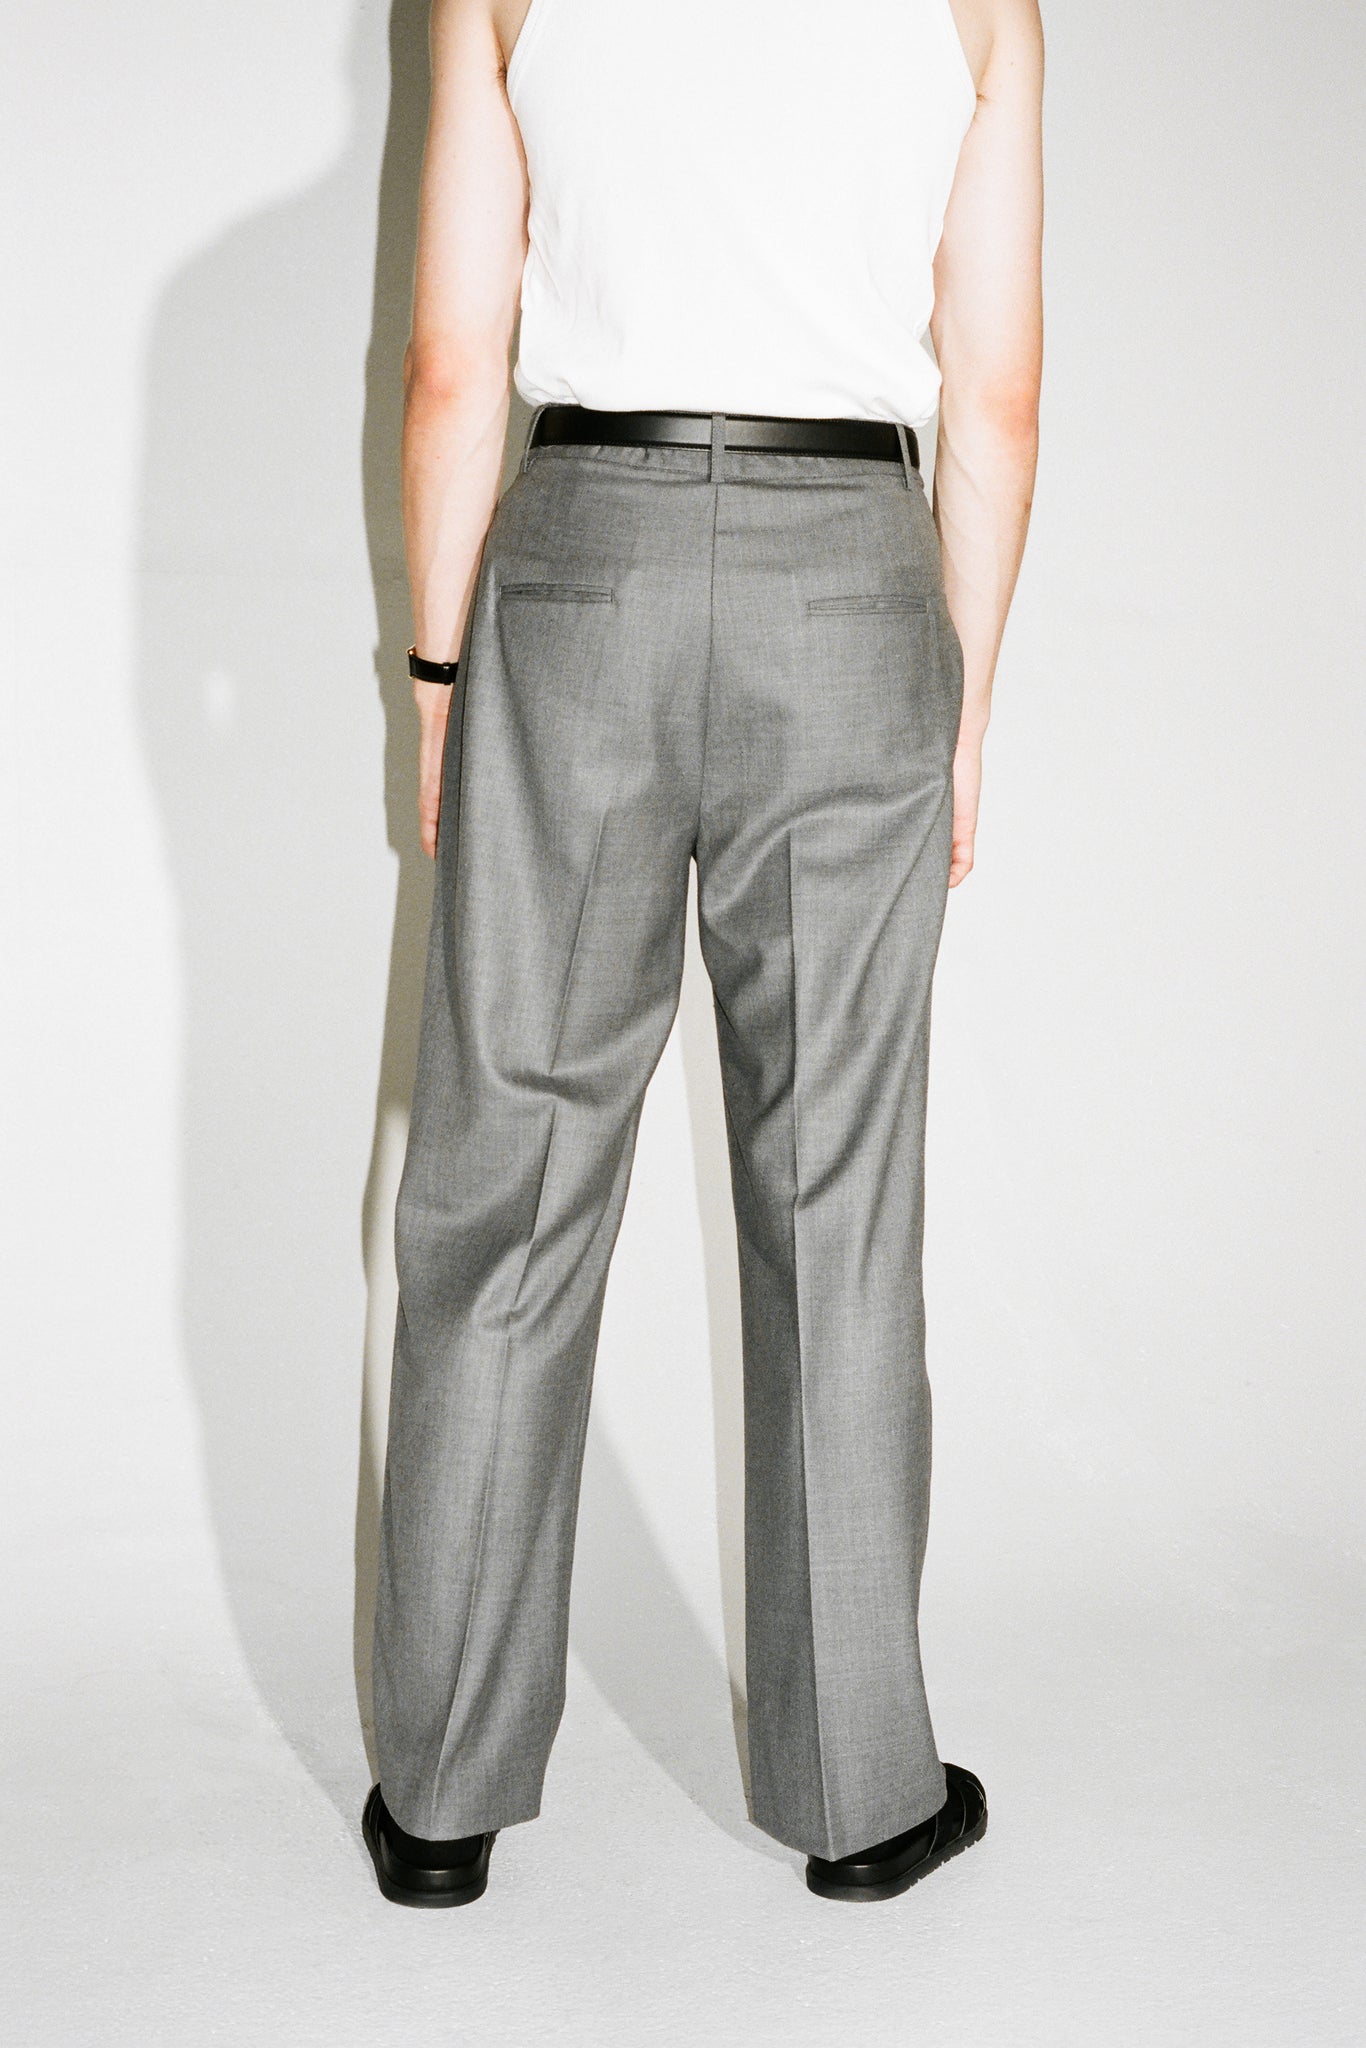 Levi's Baggy Trouser Pants - Women's - Granite Green - ShopStyle